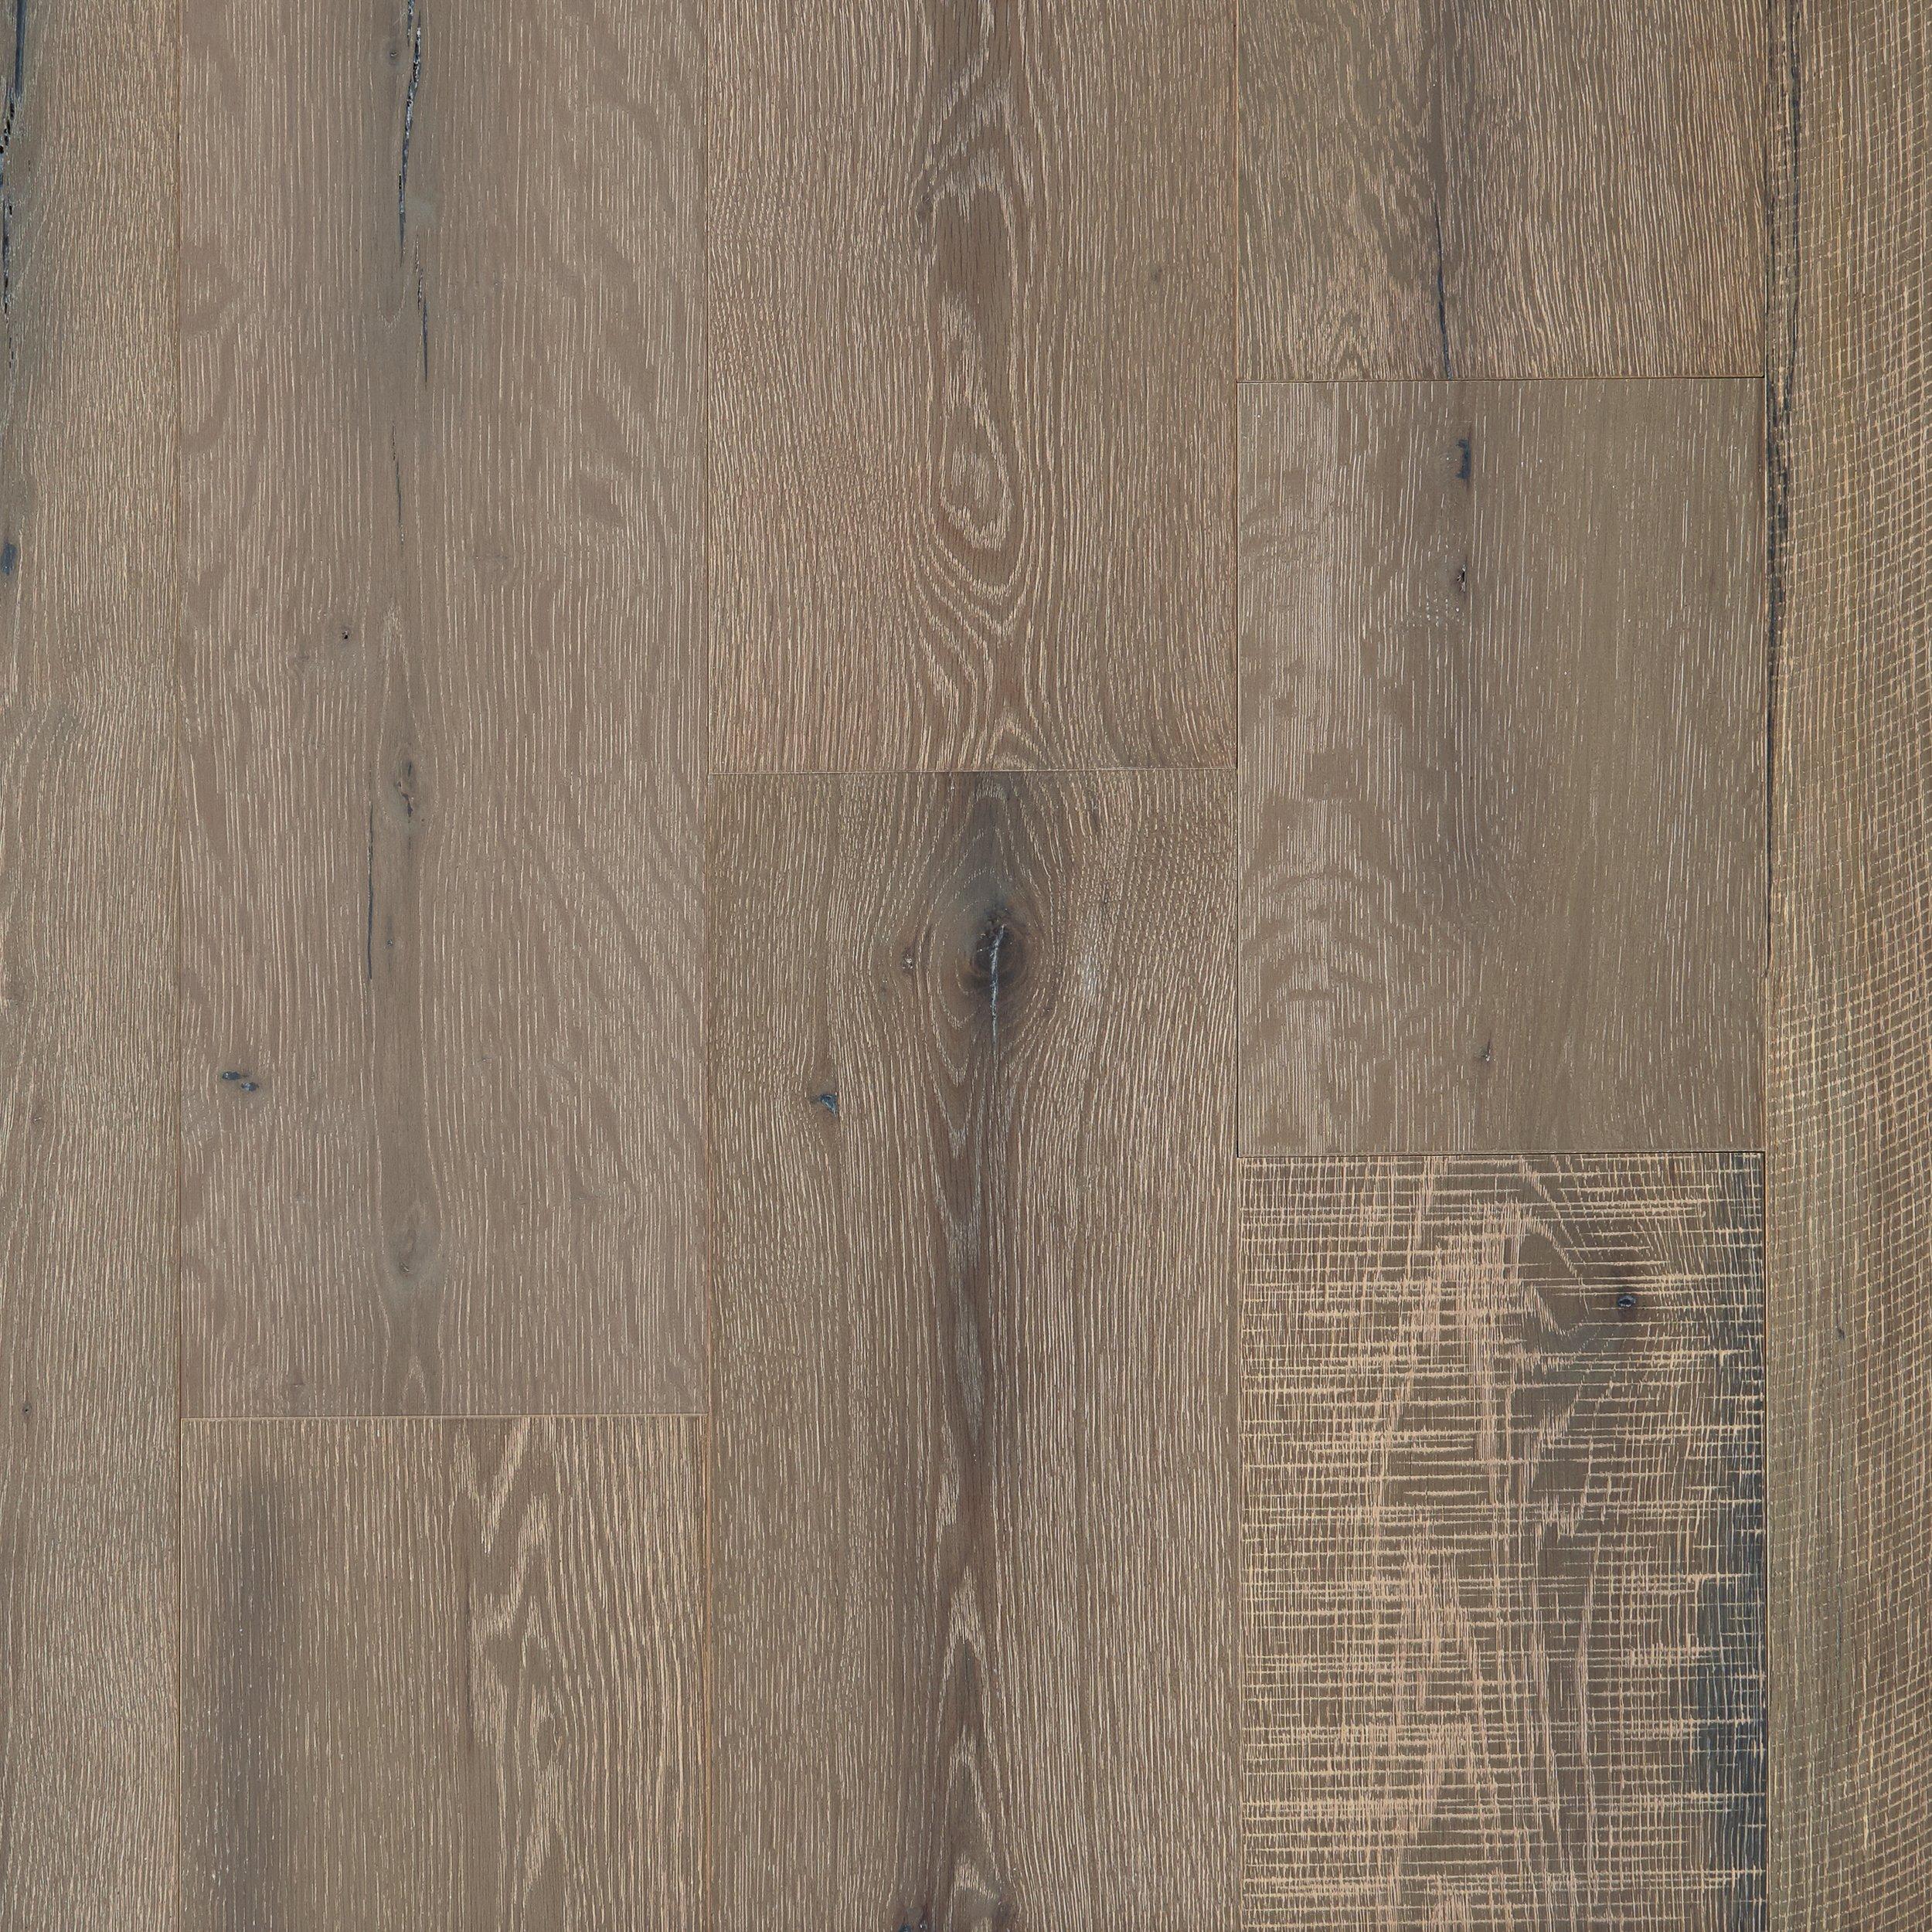 Grullo White Oak Distressed Engineered Hardwood Xl Plank 5 8in